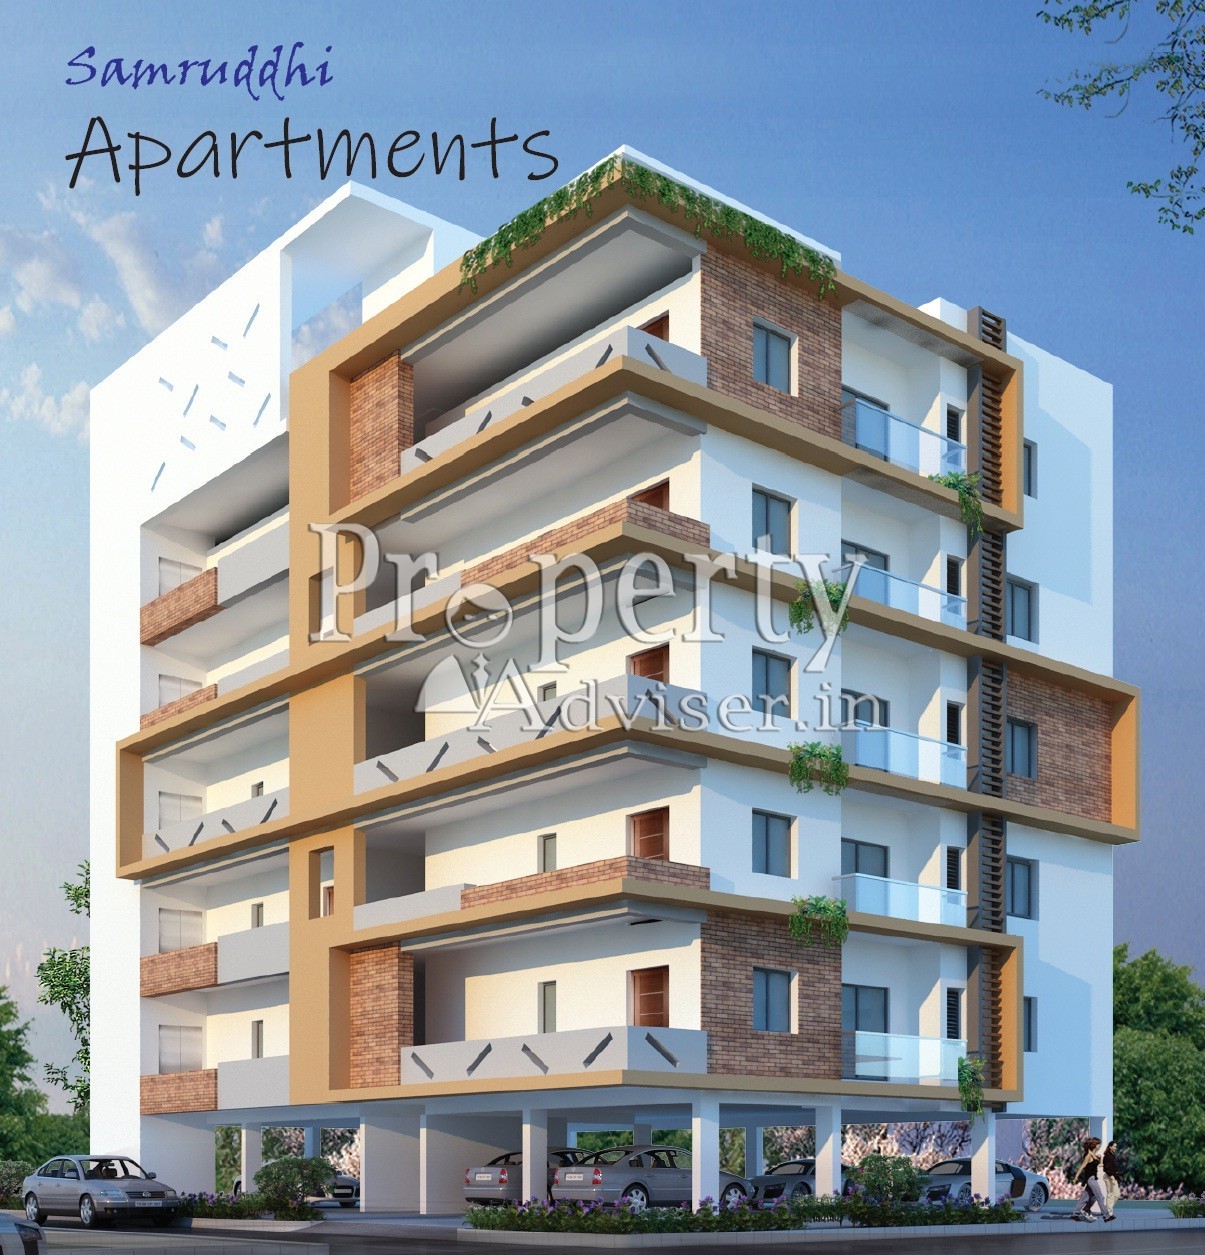 Samruddhi Apartments